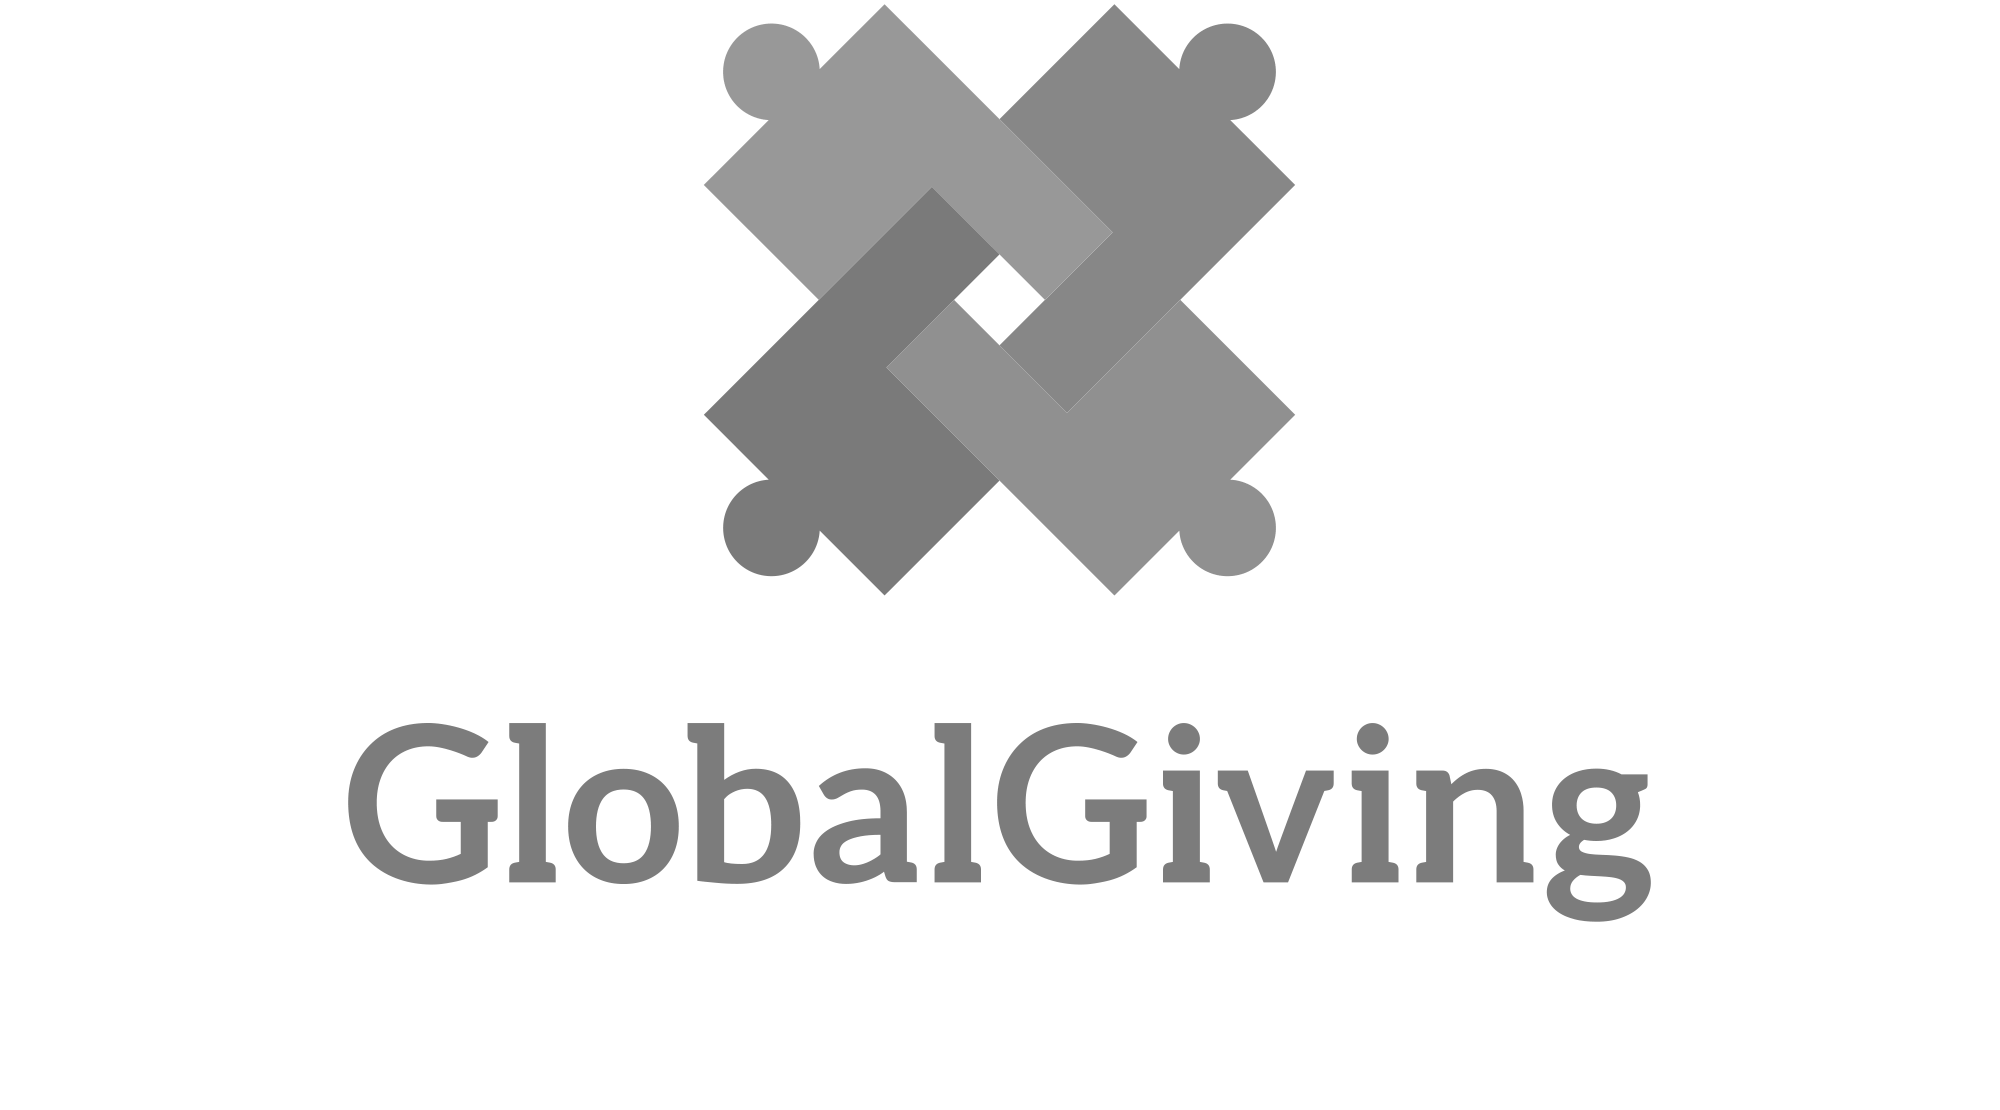 Global Giving logo black and white